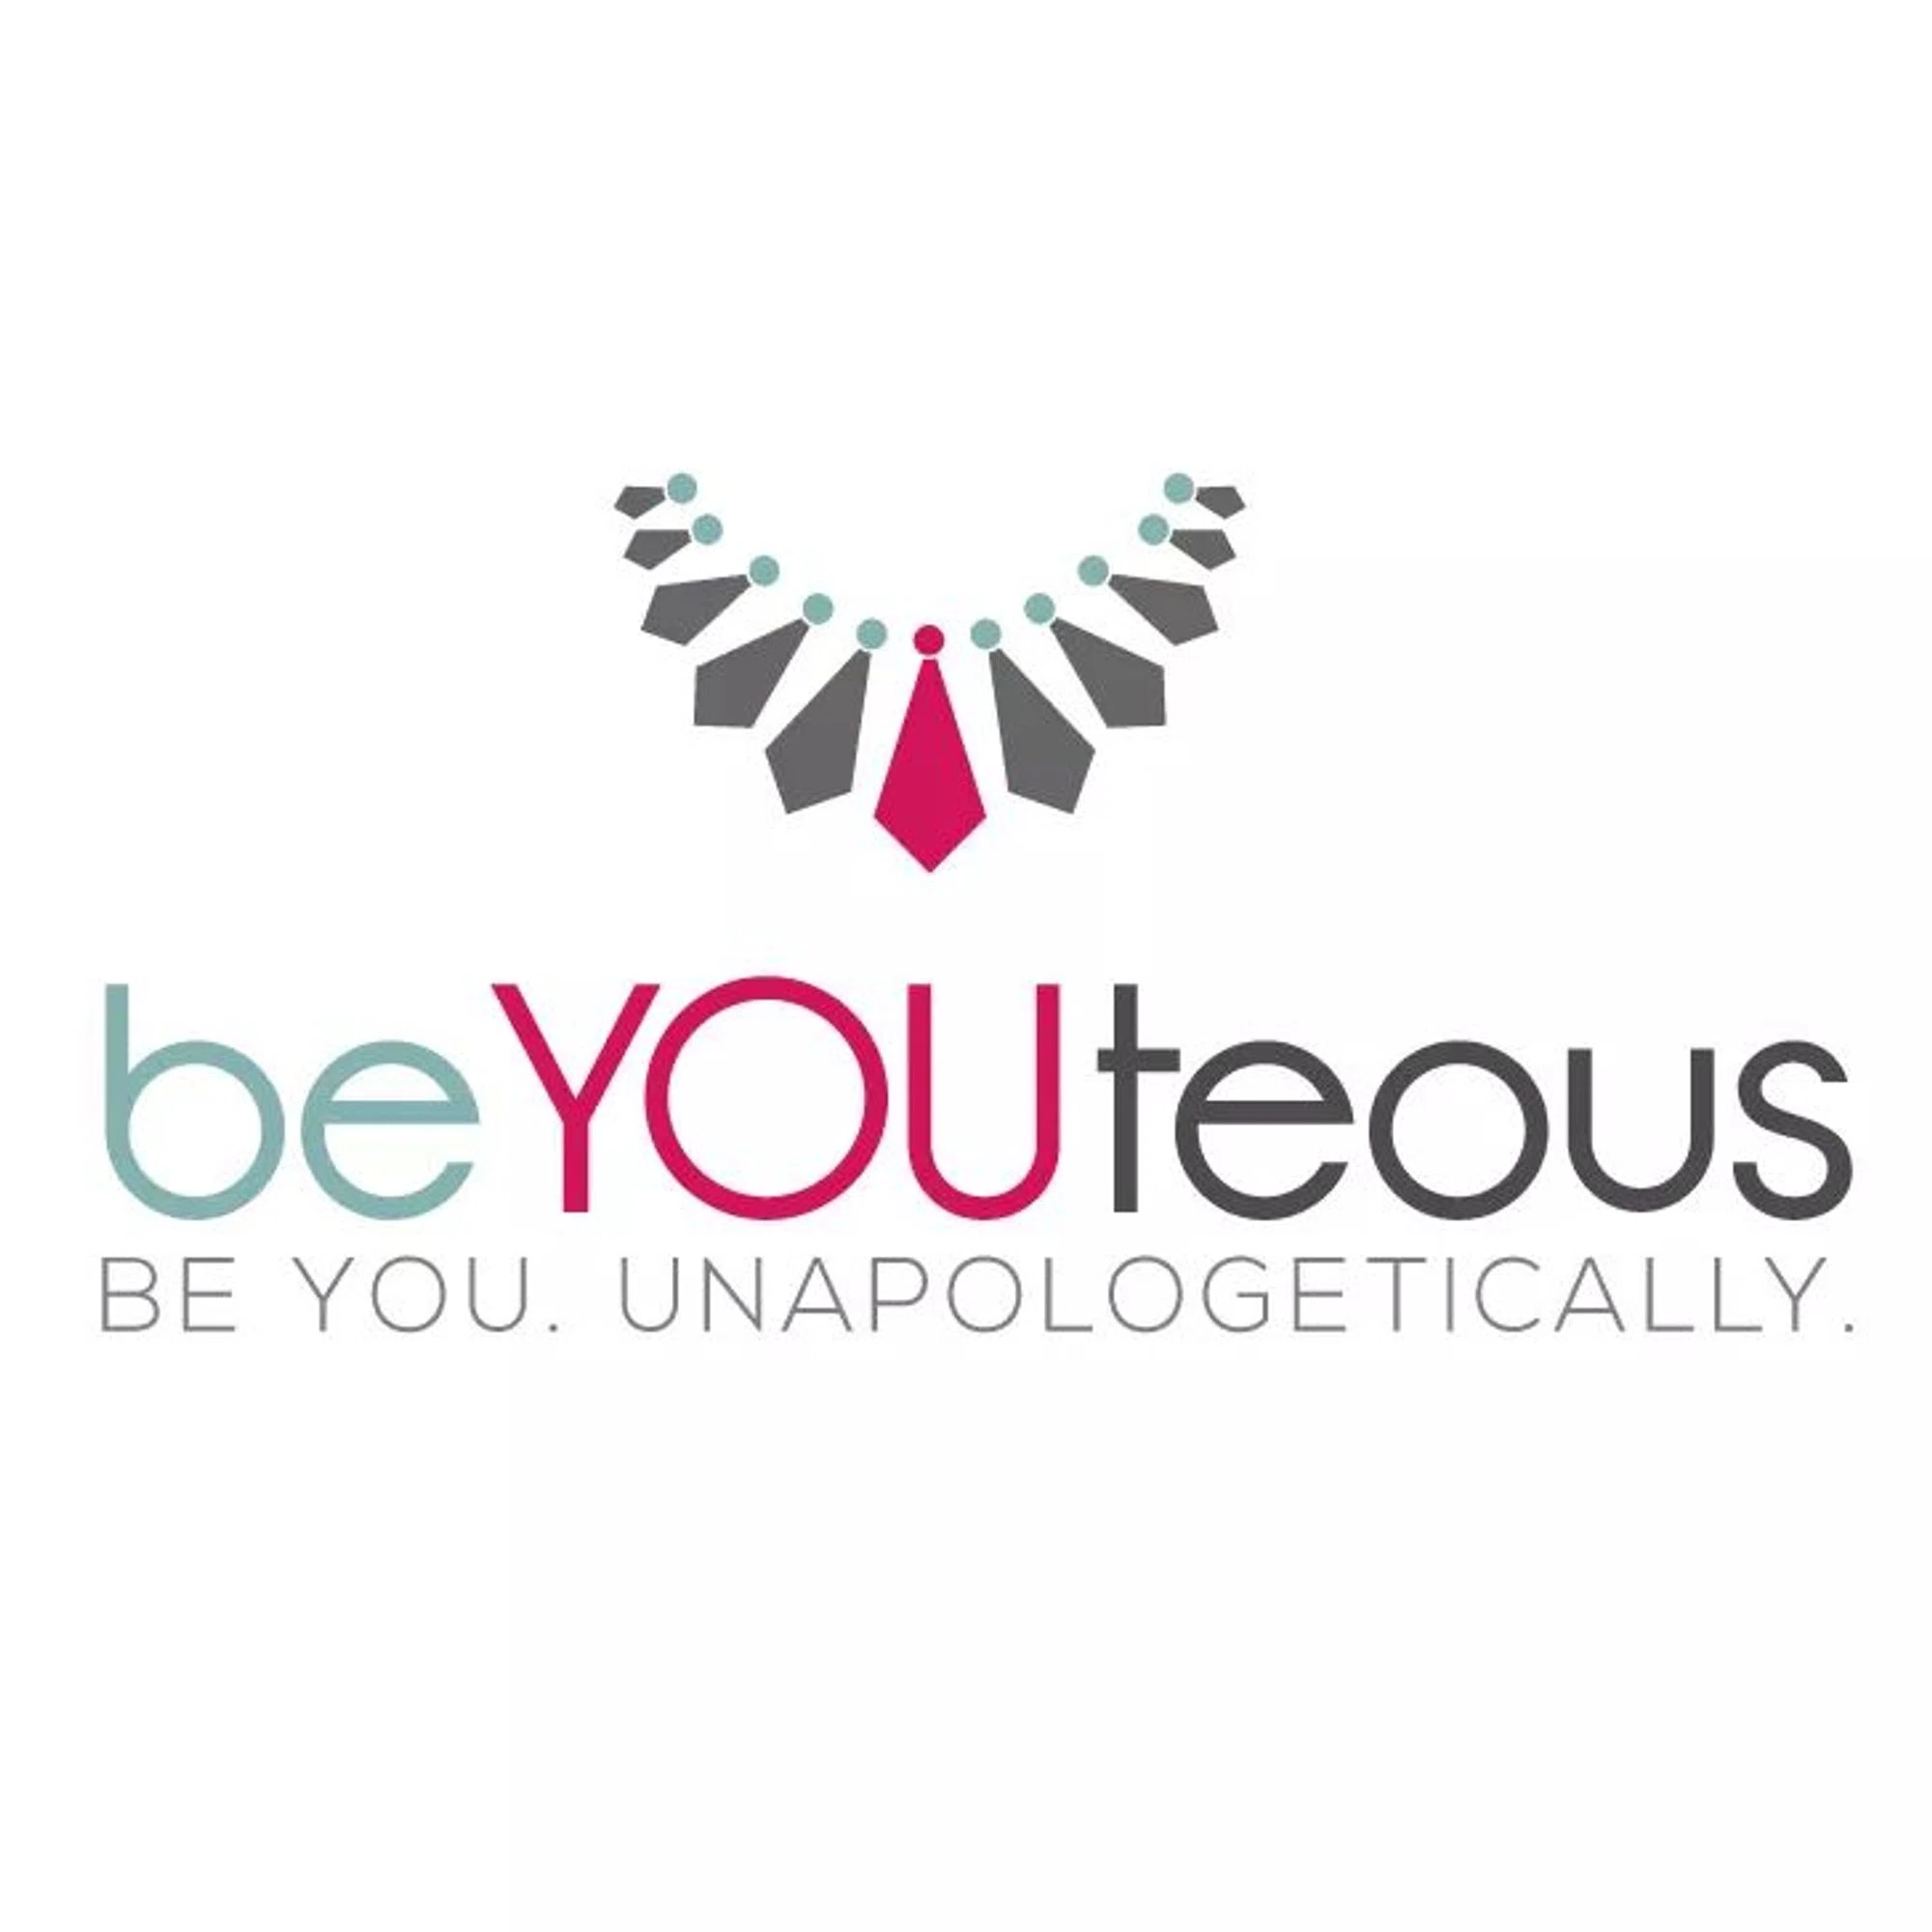 beyouteous.com logo